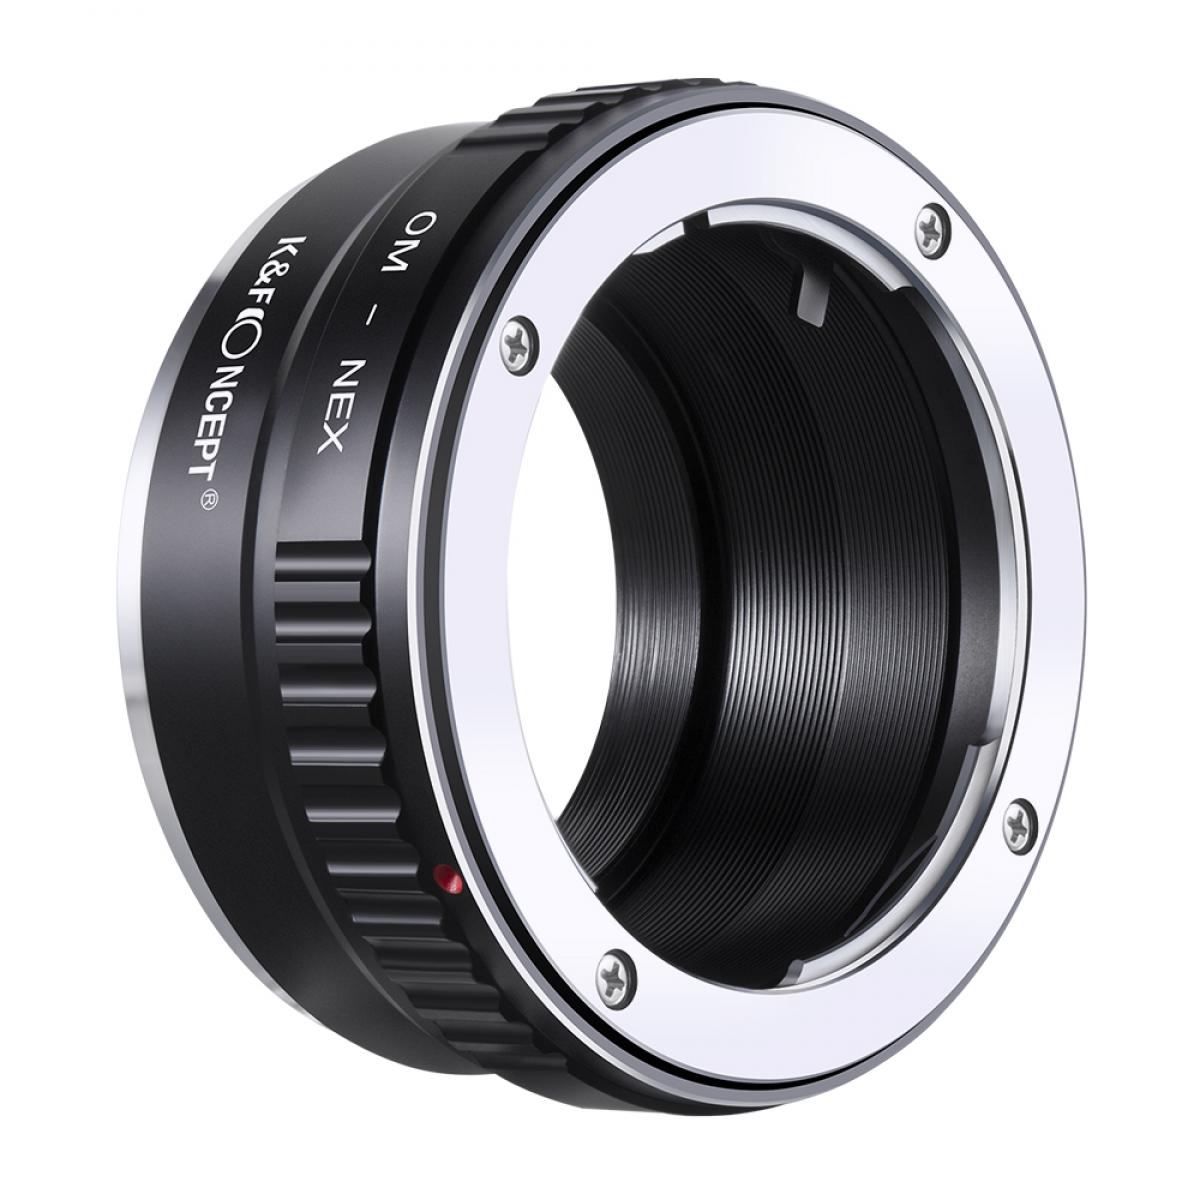 K&F Concept Olympus OM Lenses to Sony E Lens Mount Adapter K&F Concept Lens Adapter KF06.072